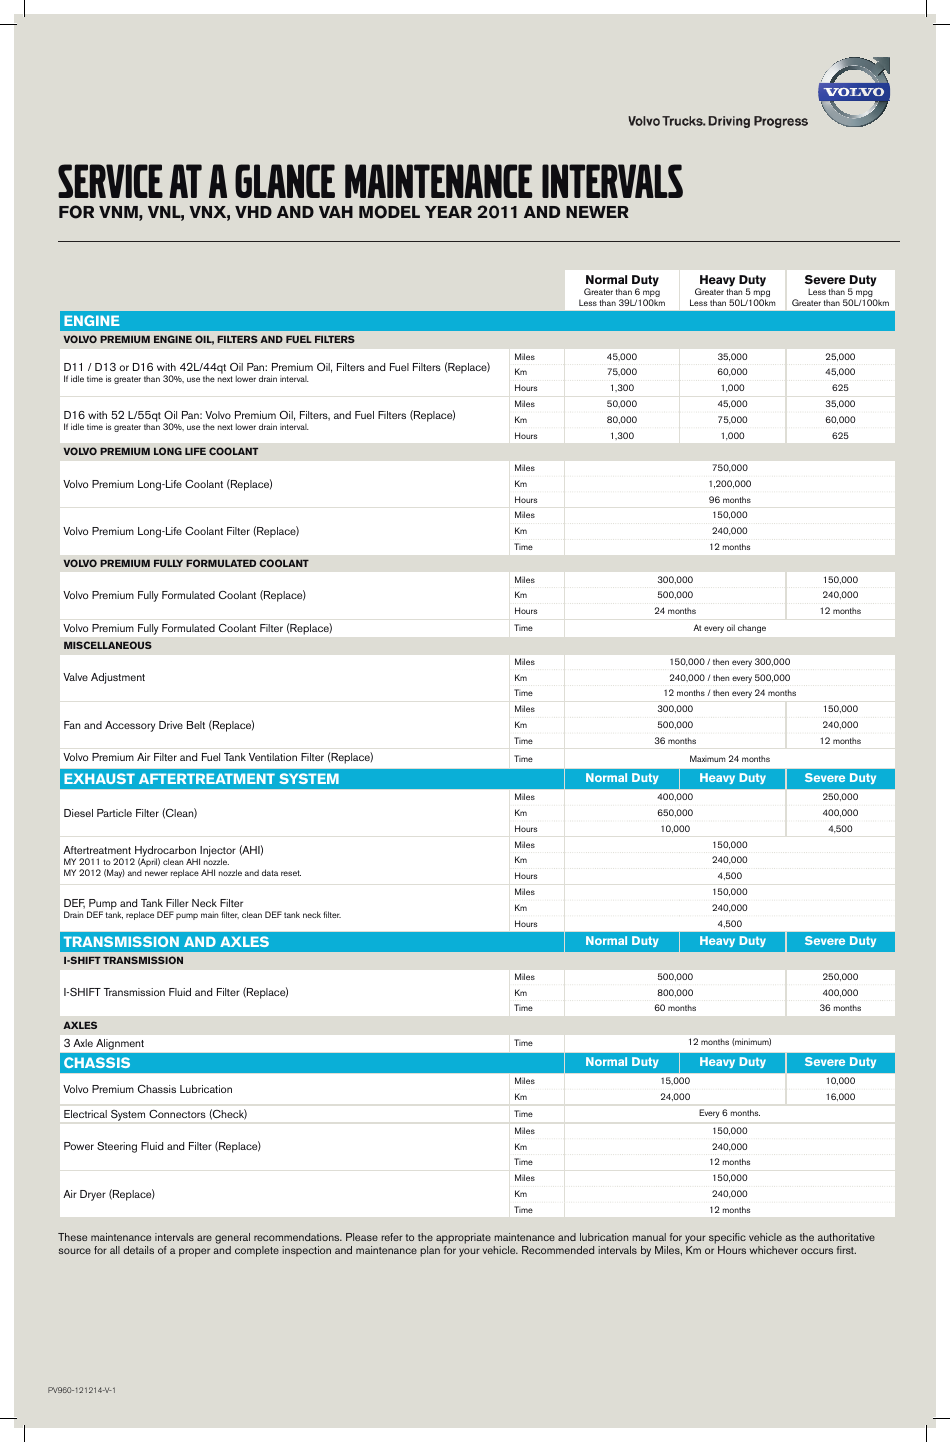 Maintenance Intervals Schedule for Vnm, Vnl, Vmx, and Vah Vehicle Models - Volvo